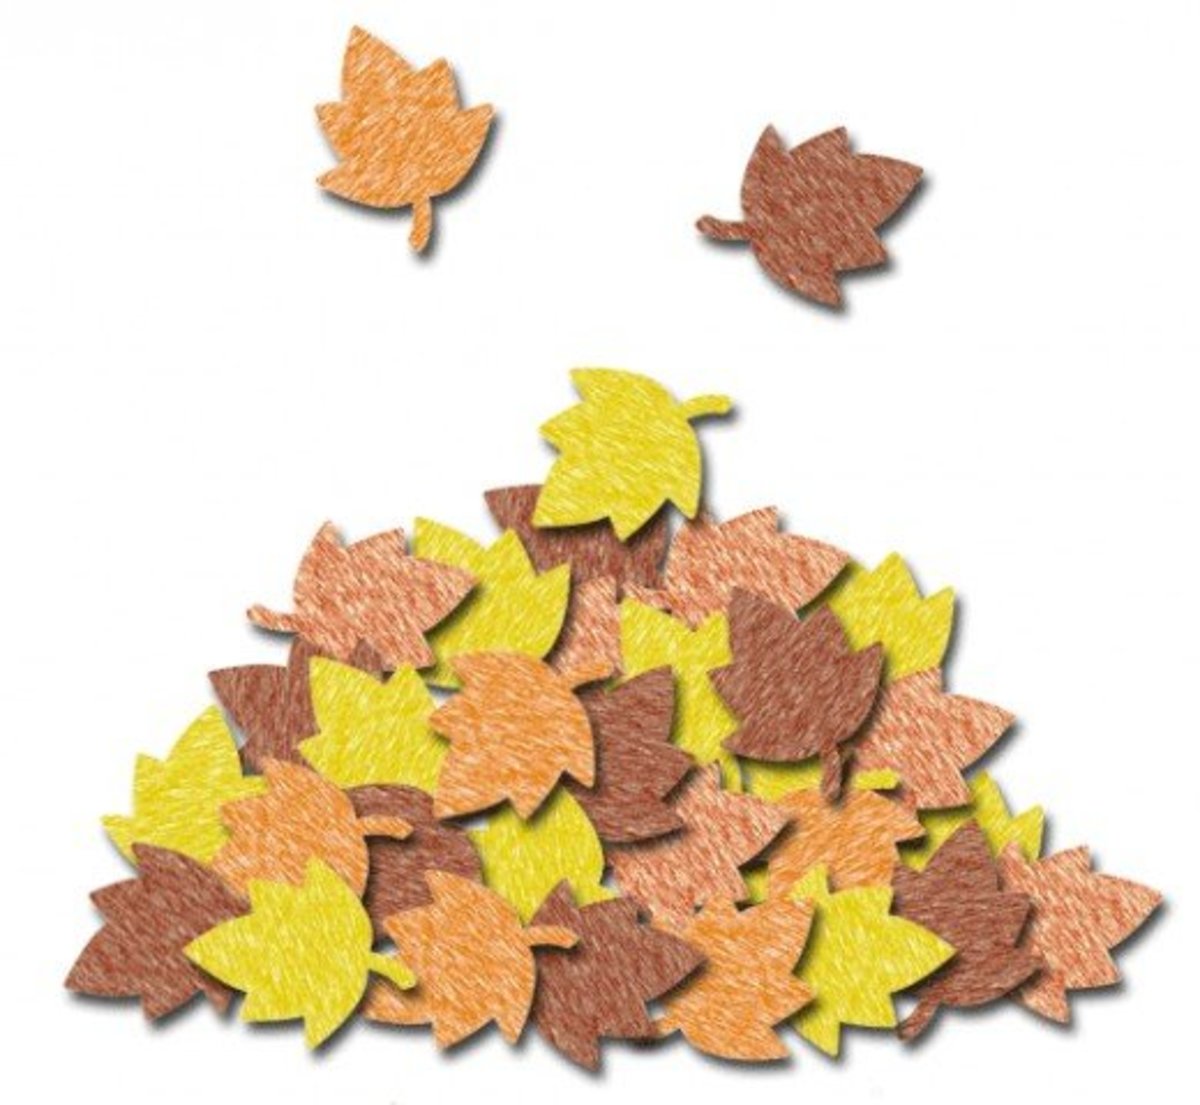 fall leaf pile clipart